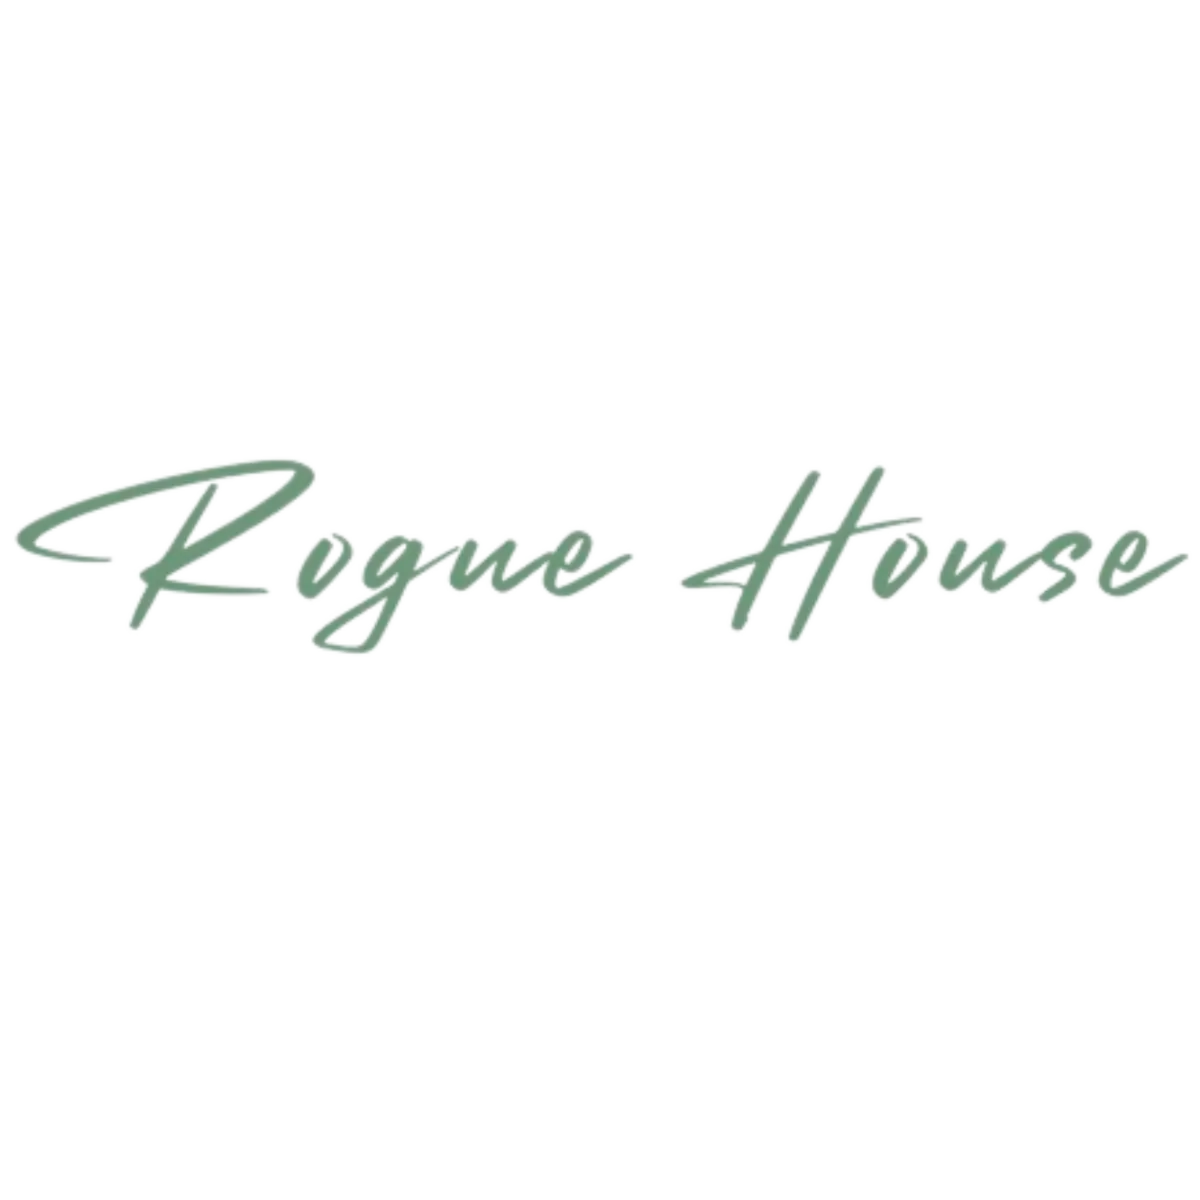 Rogue House